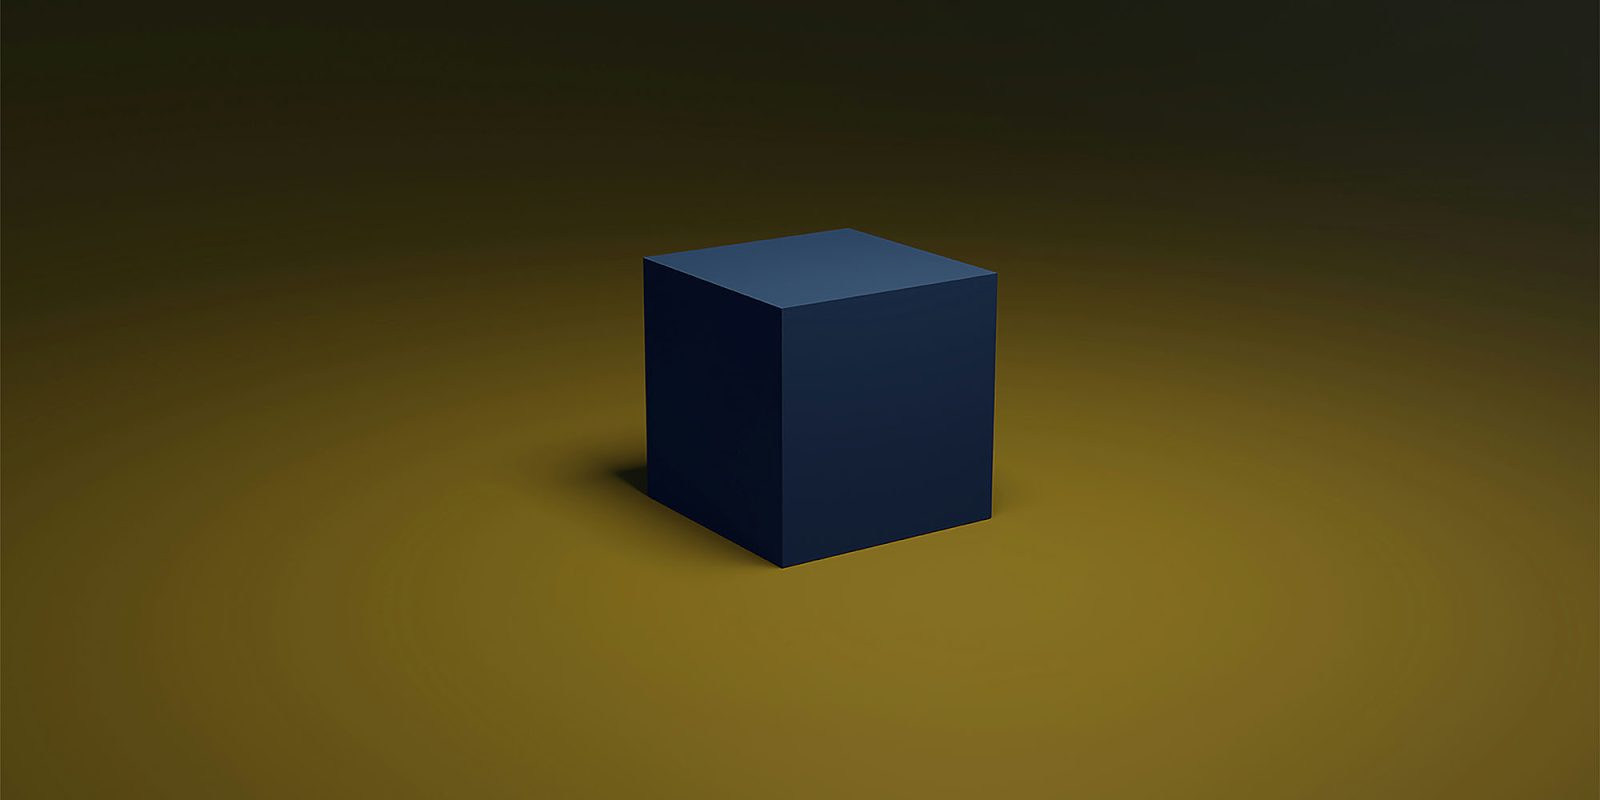 Jony Ive AI device | Blue cube image